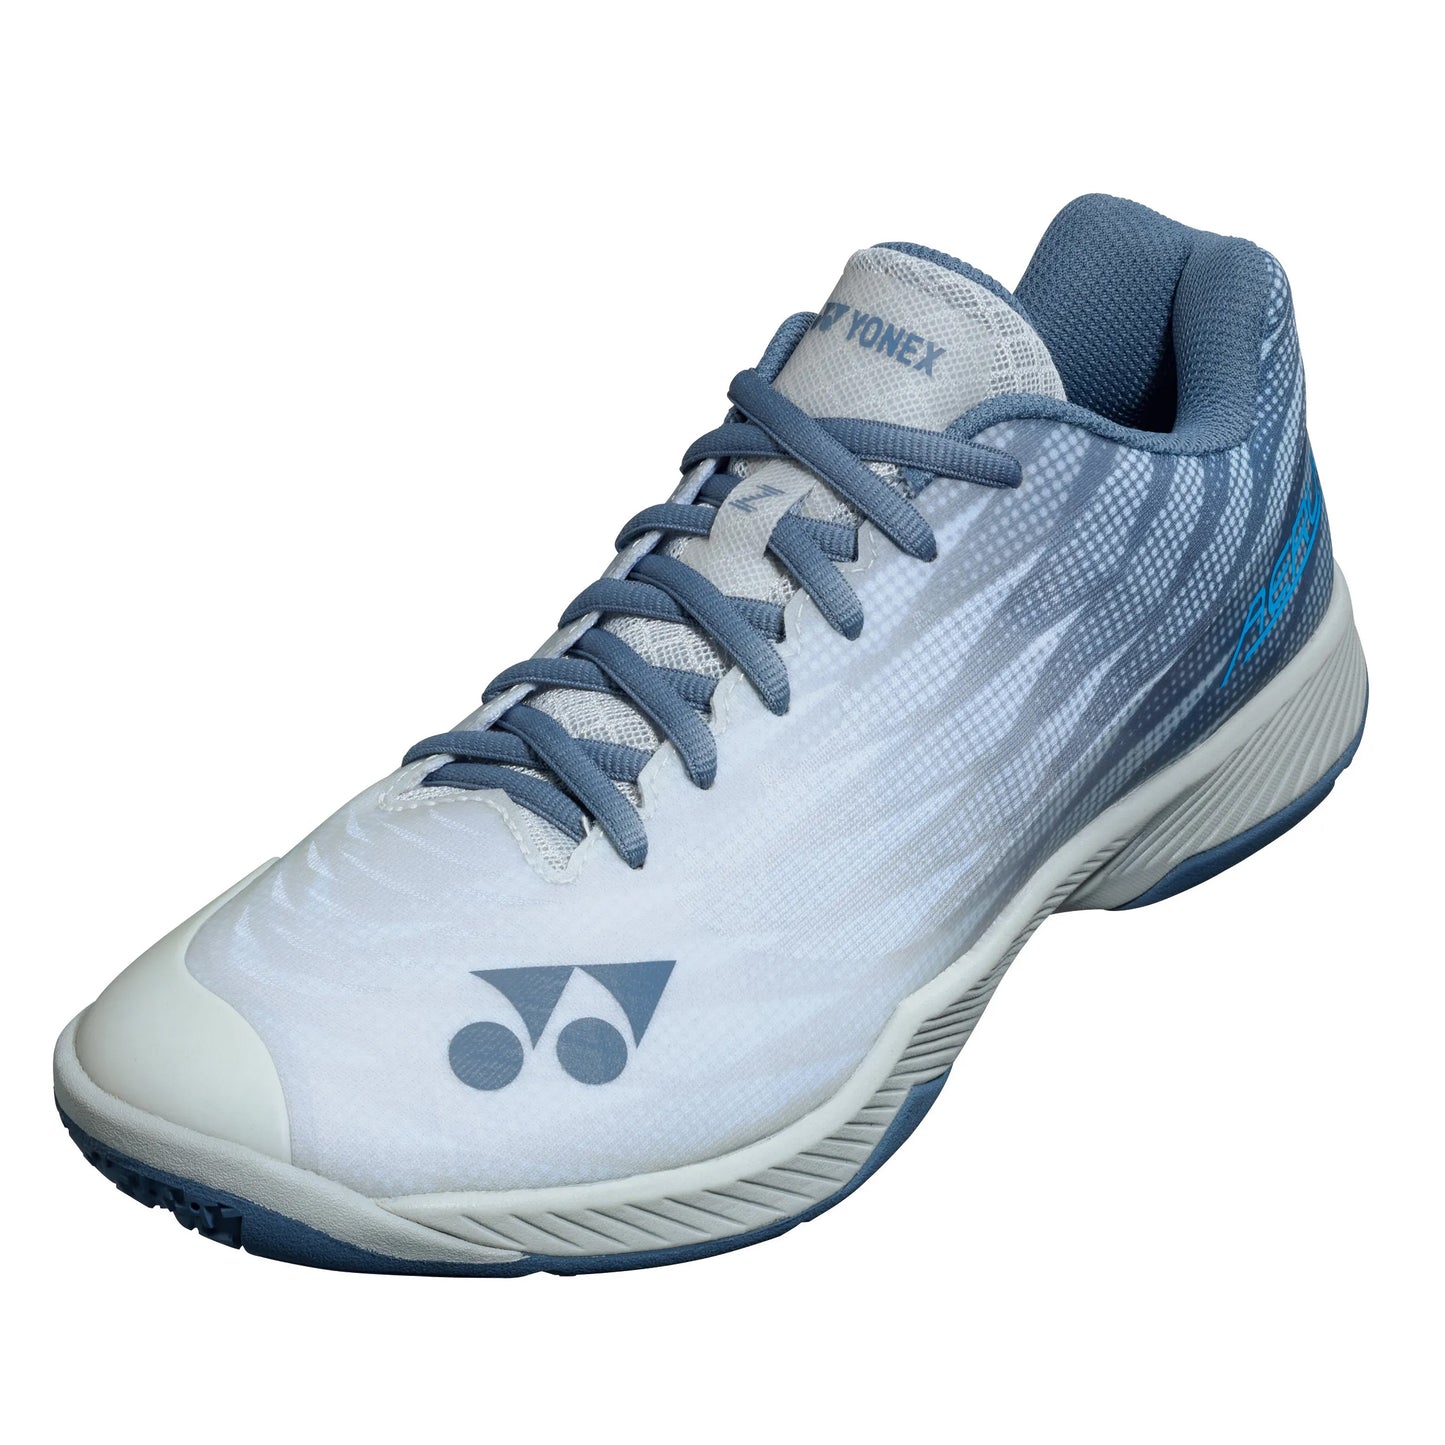 Yonex Aerus Z2 Men Power Cushion Badminton Shoes - Best Price online Prokicksports.com